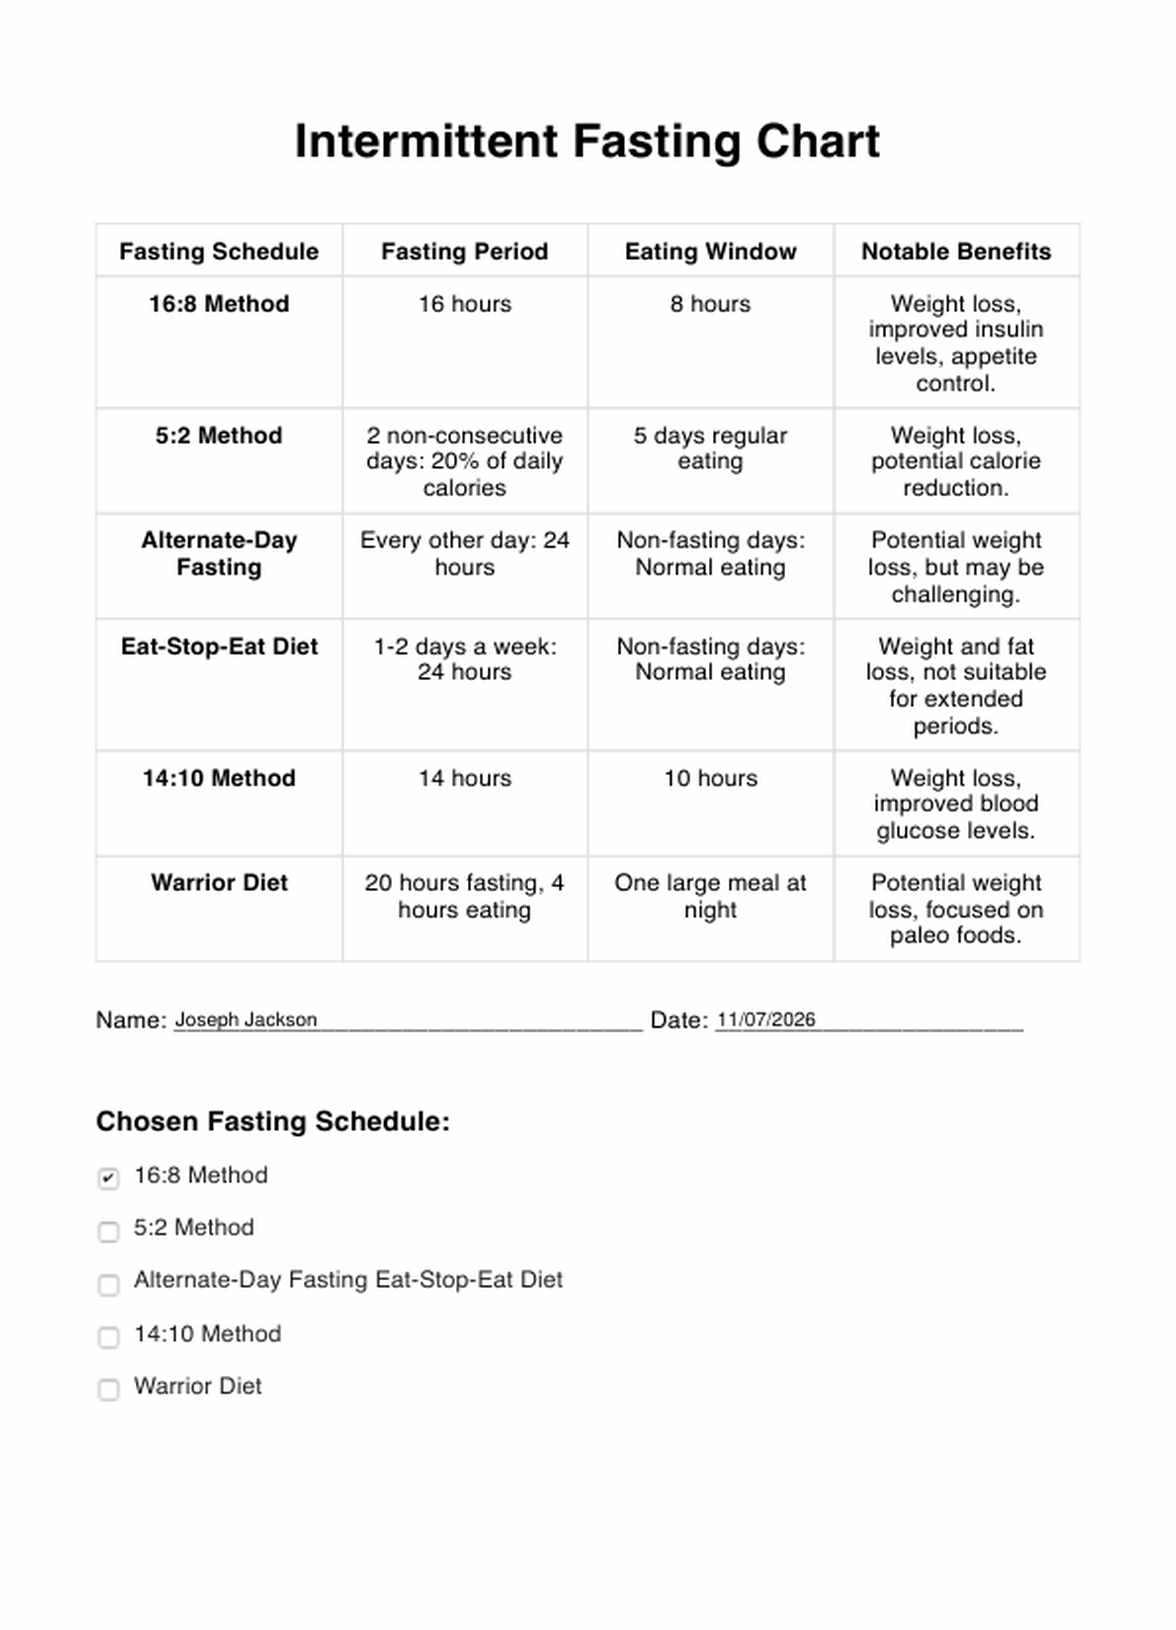 Intermittent Fasting PDF Example